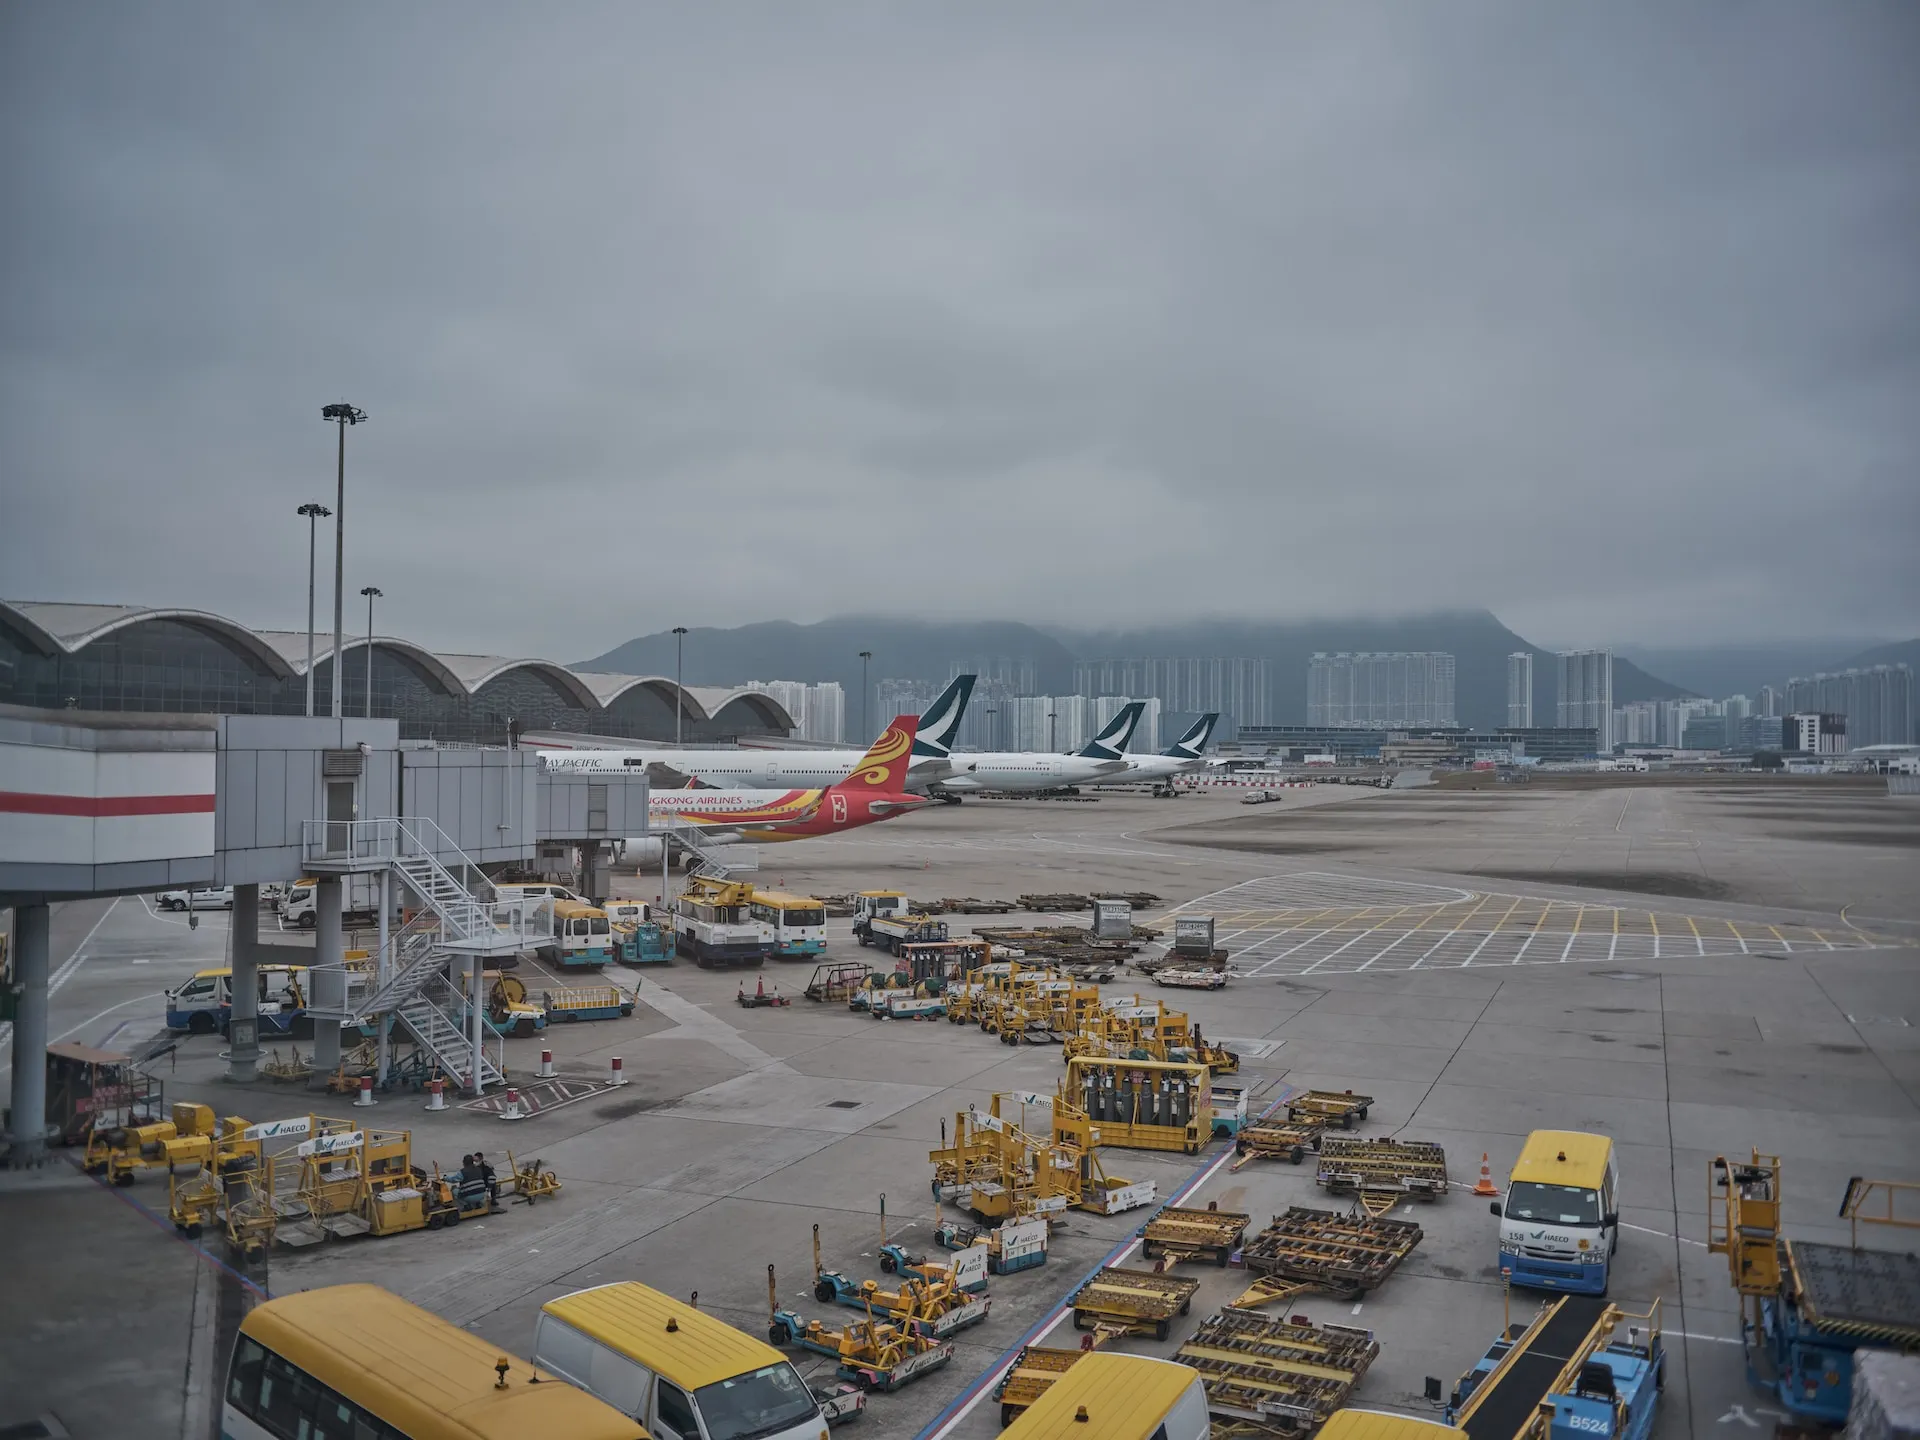 Hong Kong International Airport. Source: Photo by Jimmy Gu on Unsplash